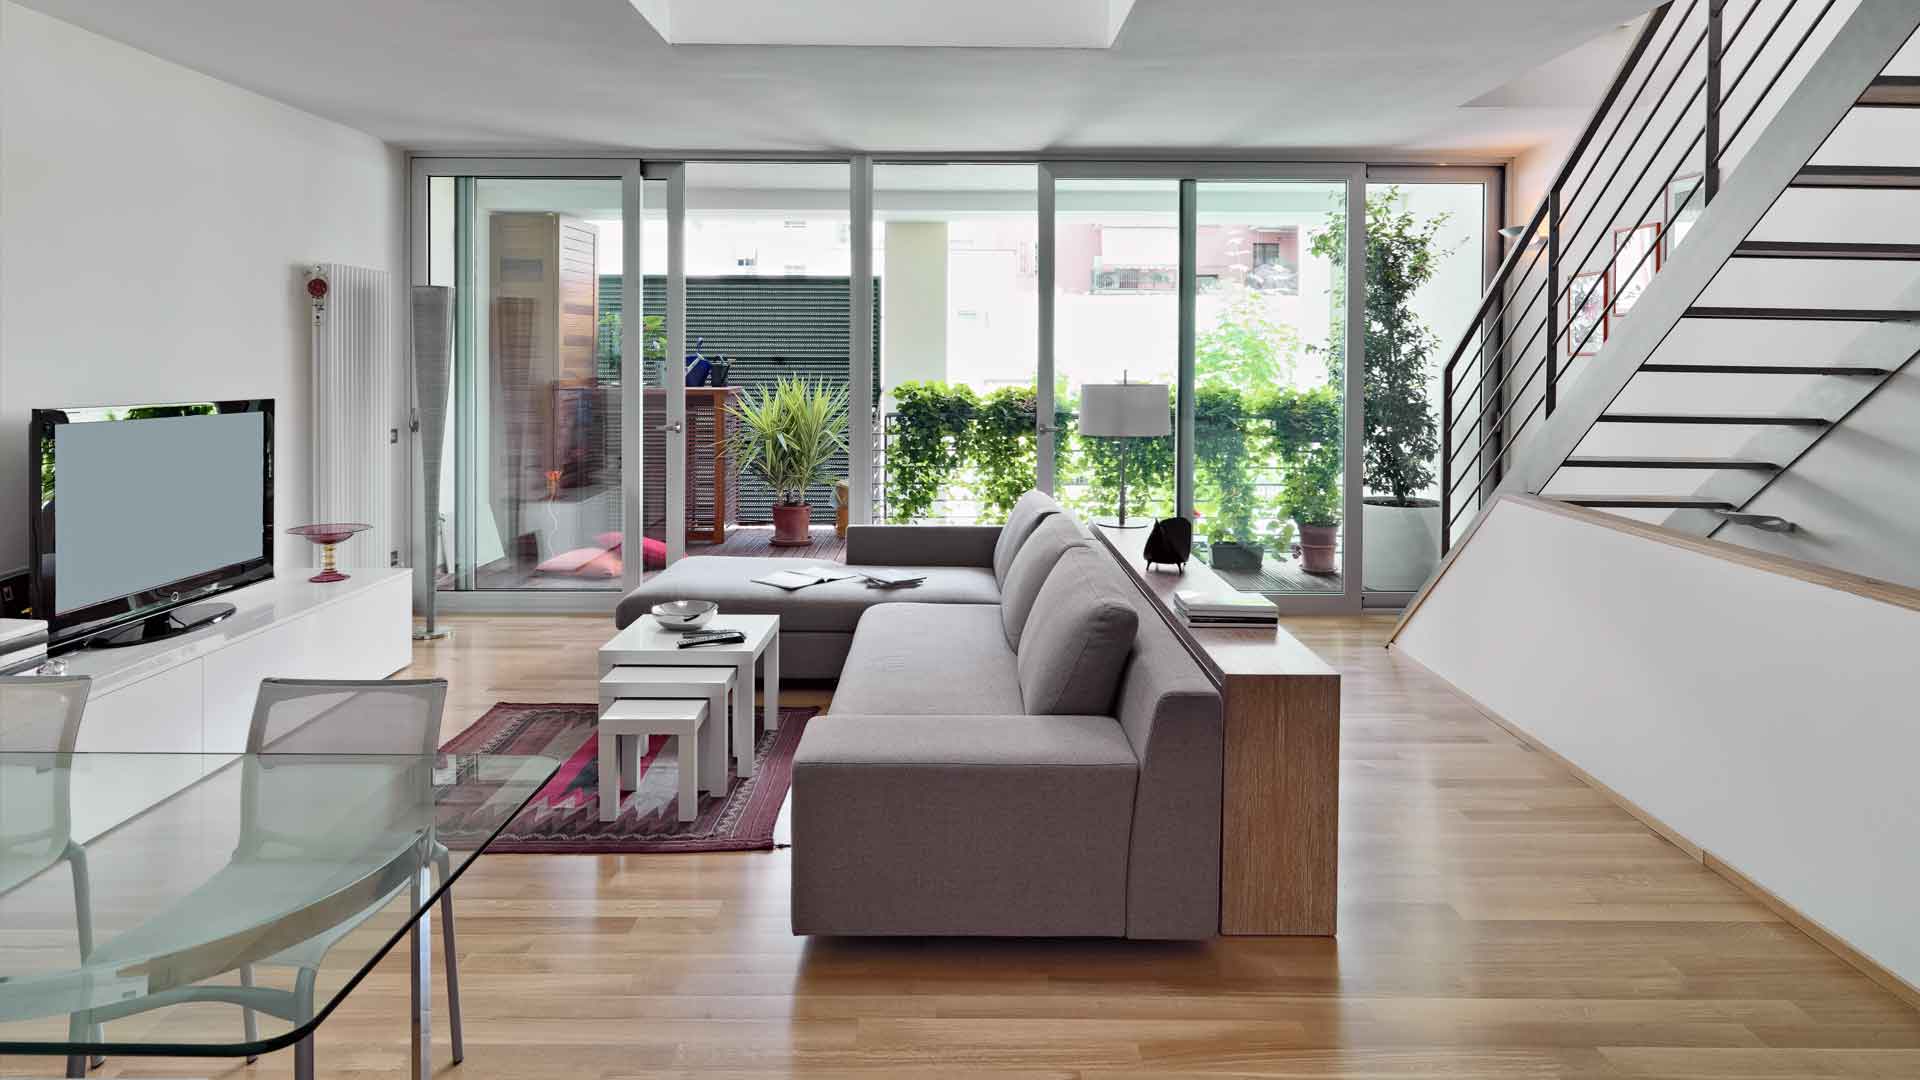 interiors-of-a-modern-living-room-NUJ39VJ-web-1.jpg